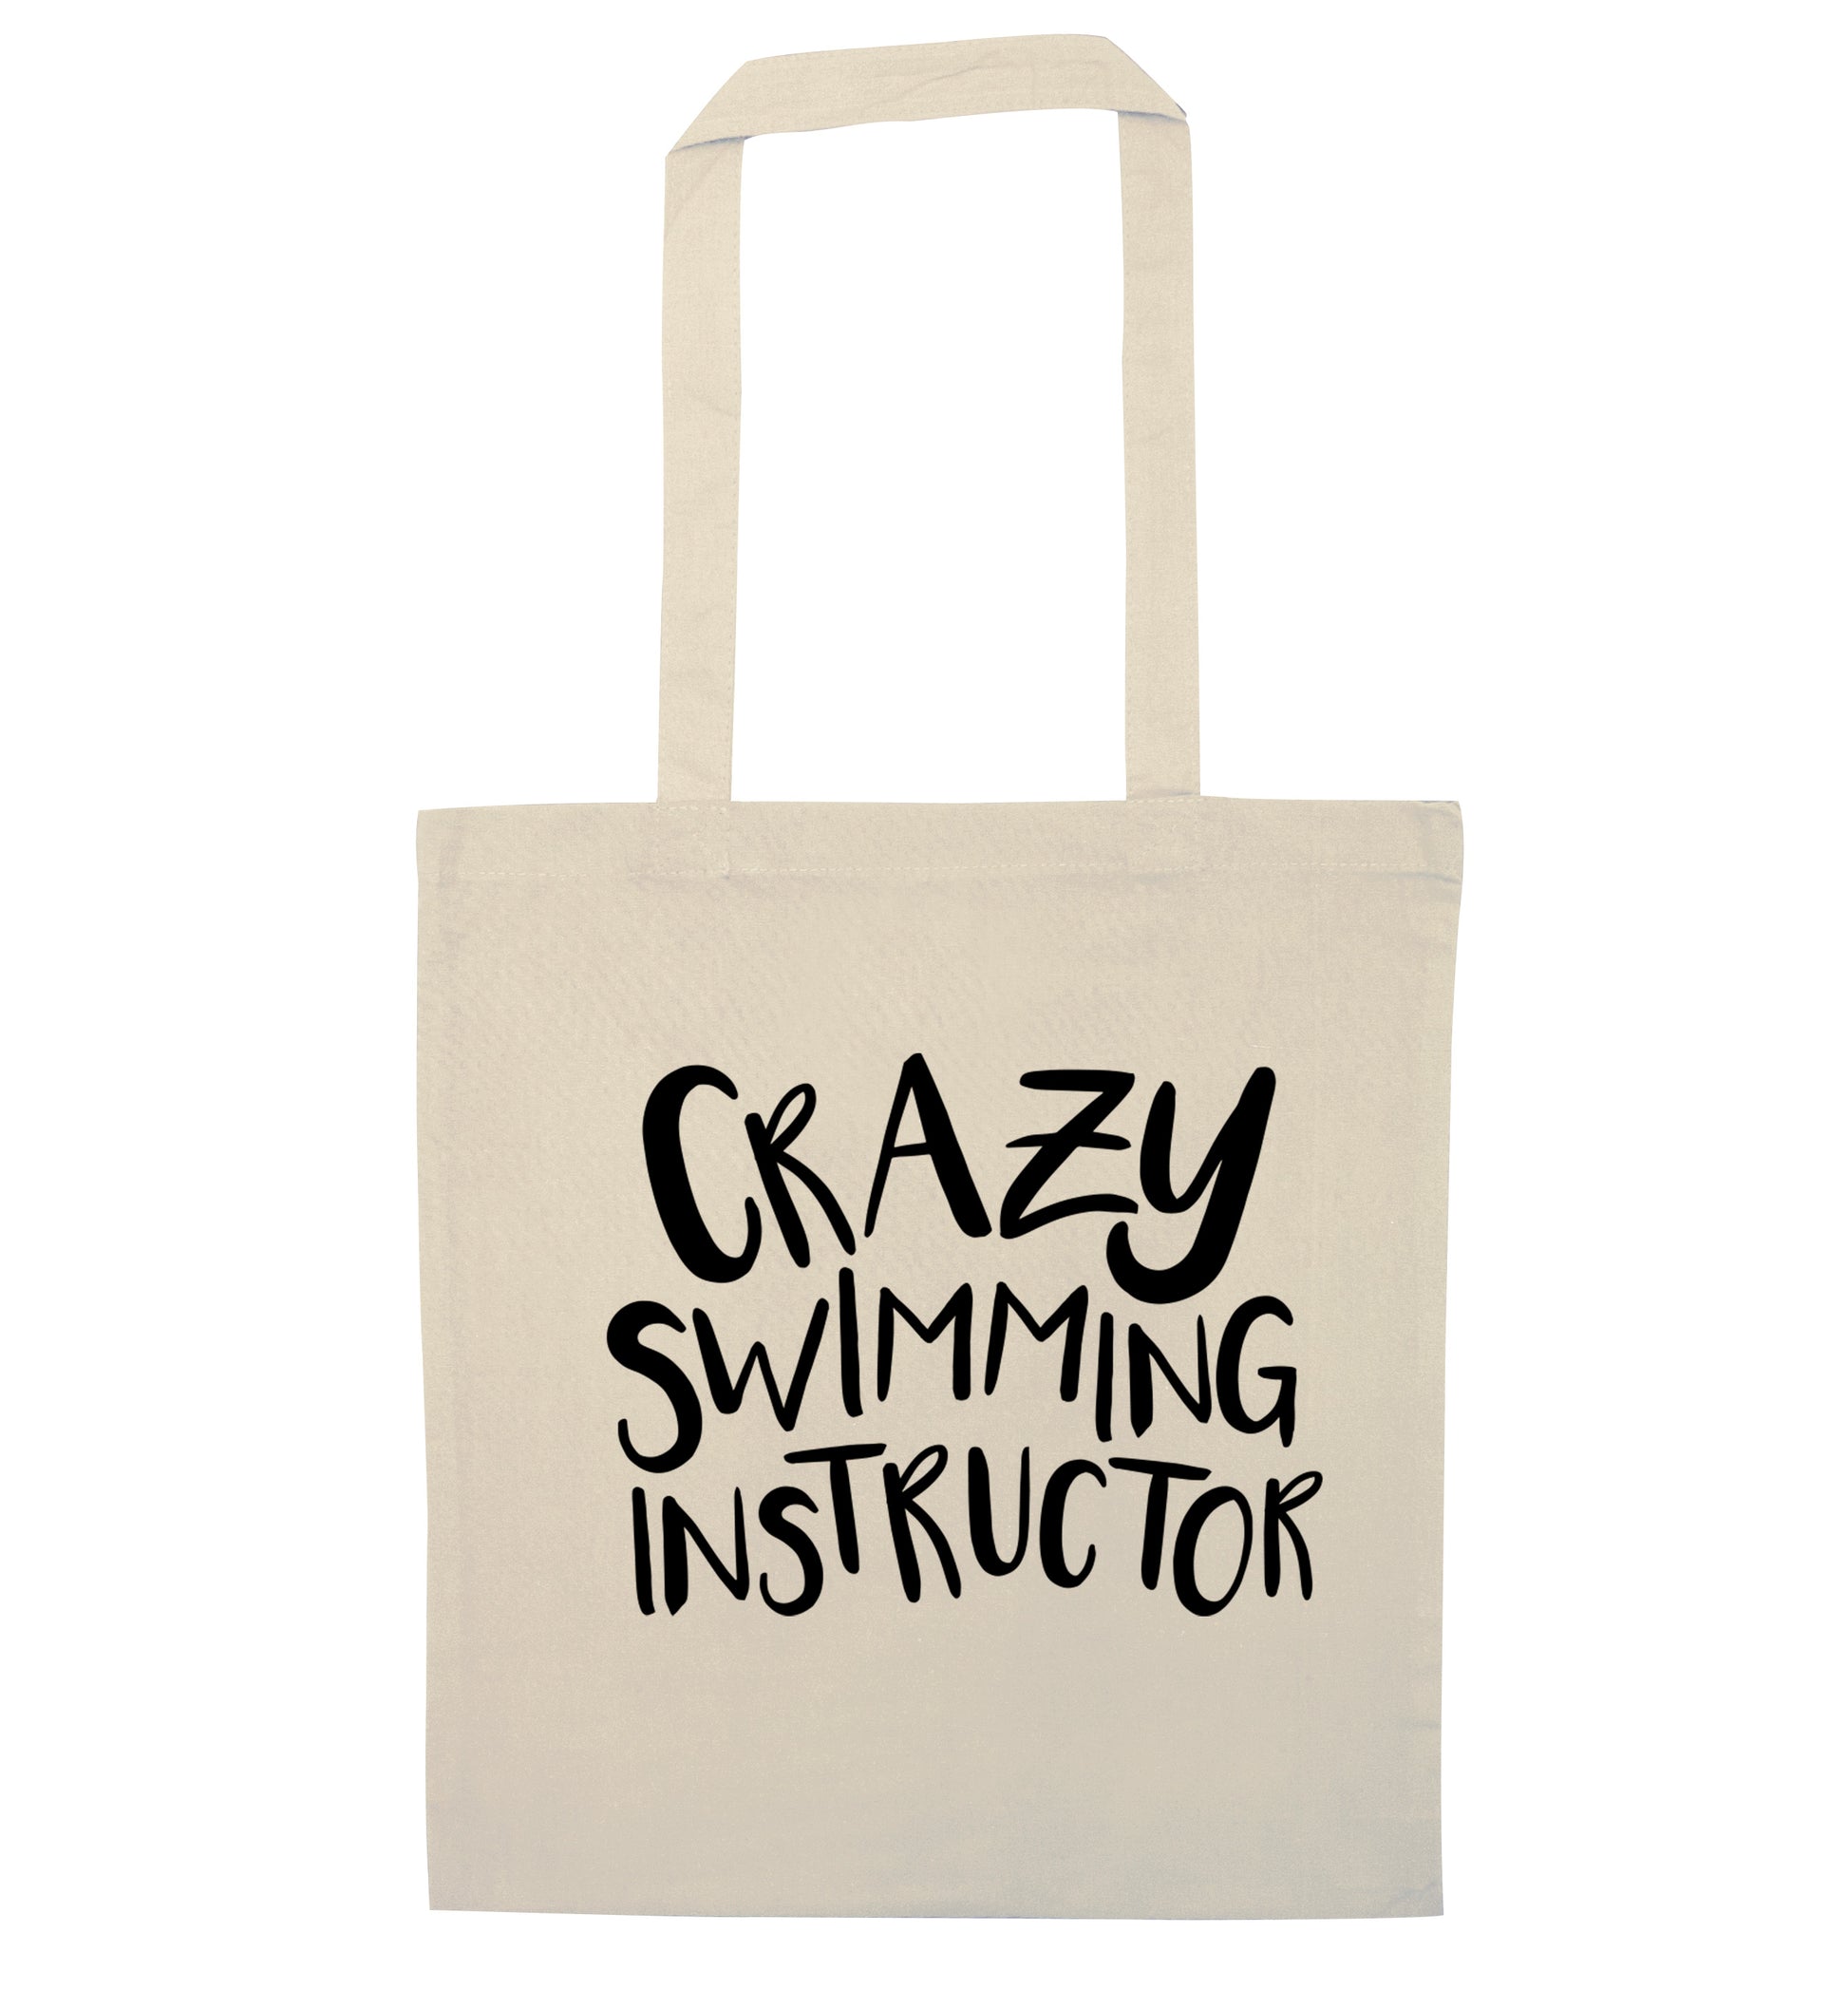 Crazy swimming instructor natural tote bag